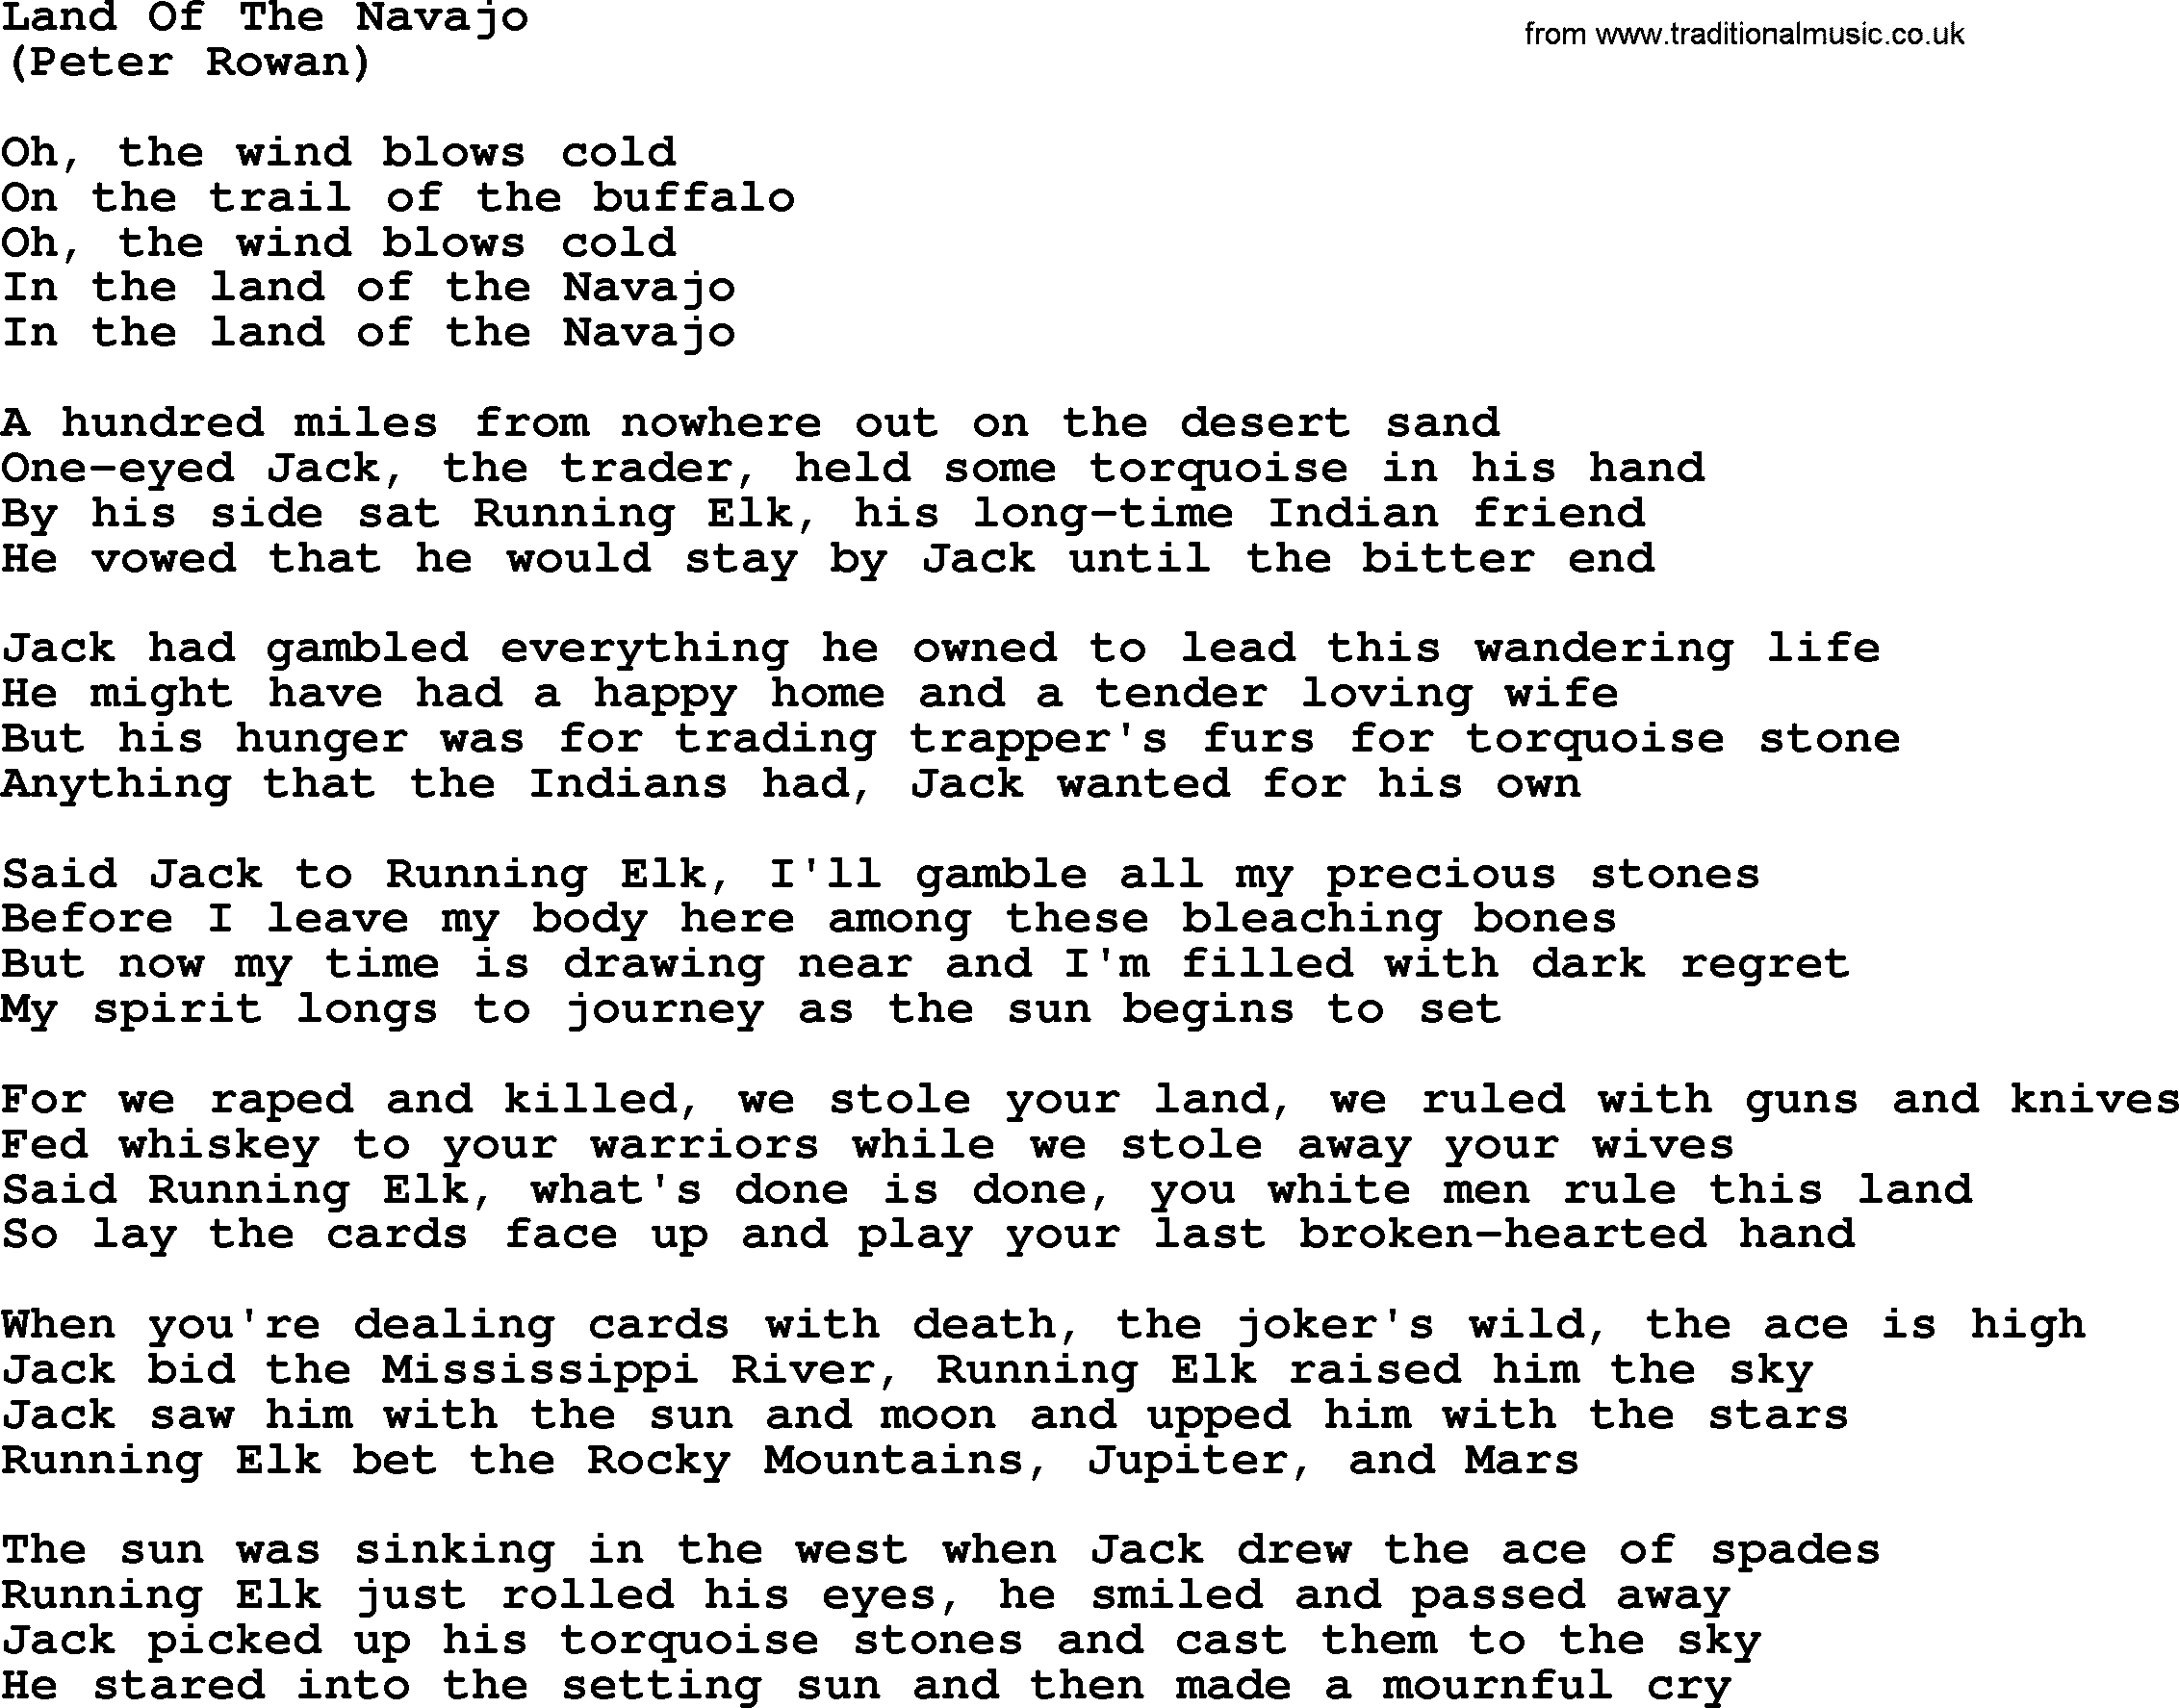 The Byrds song Land Of The Navajo, lyrics